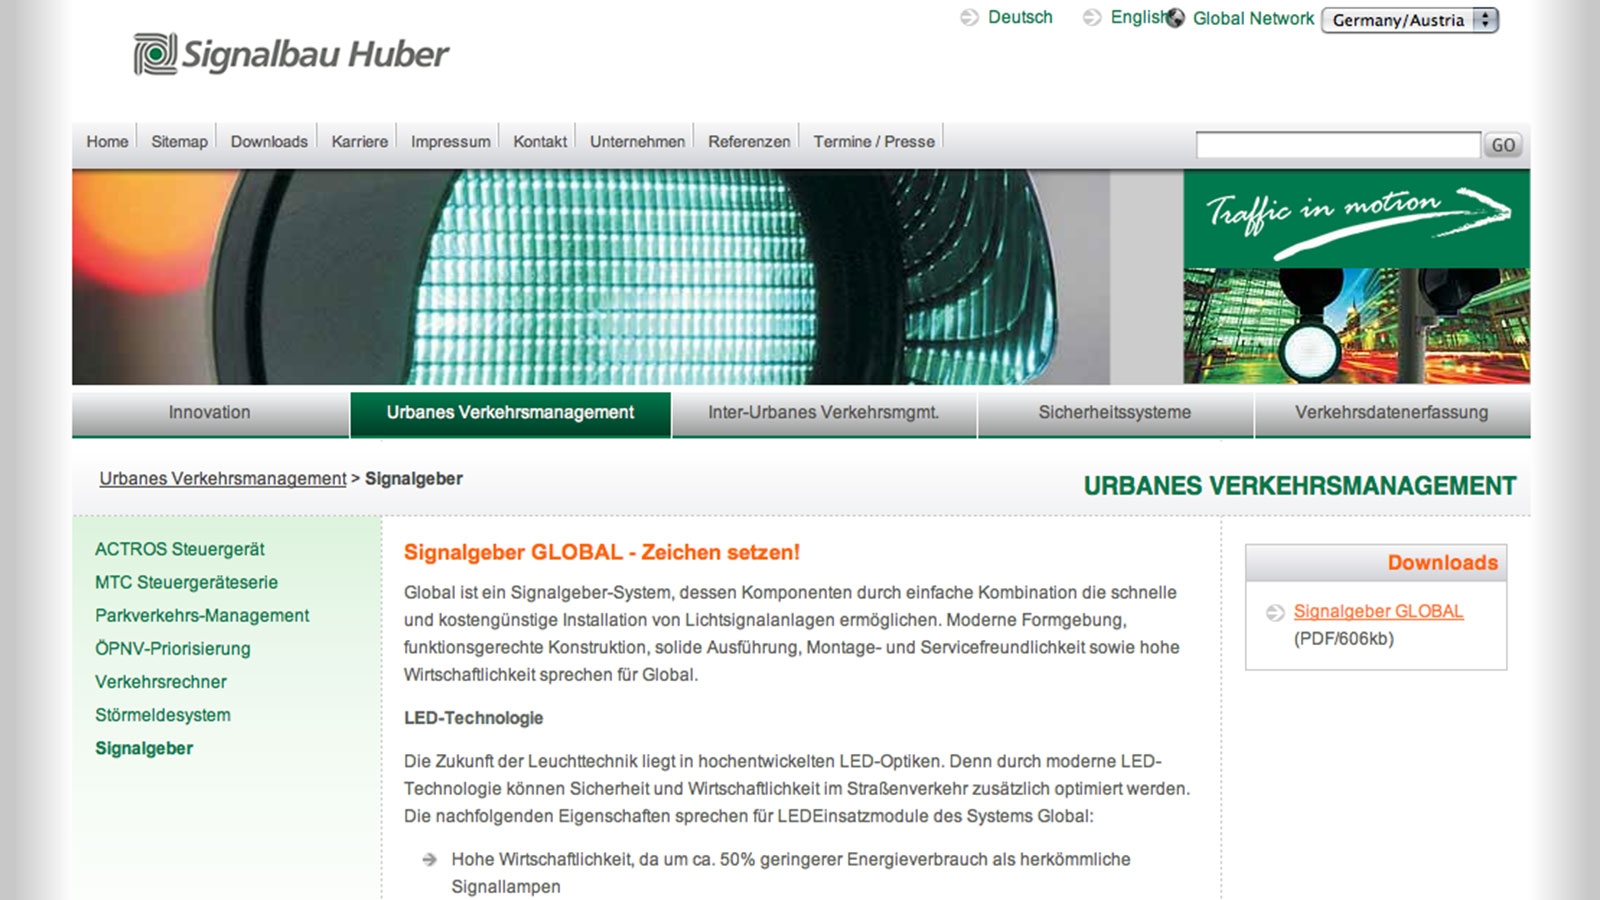 Signalbau Huber | signalbau-huber.com | 2006 (Screen Only 03) © echonet communication